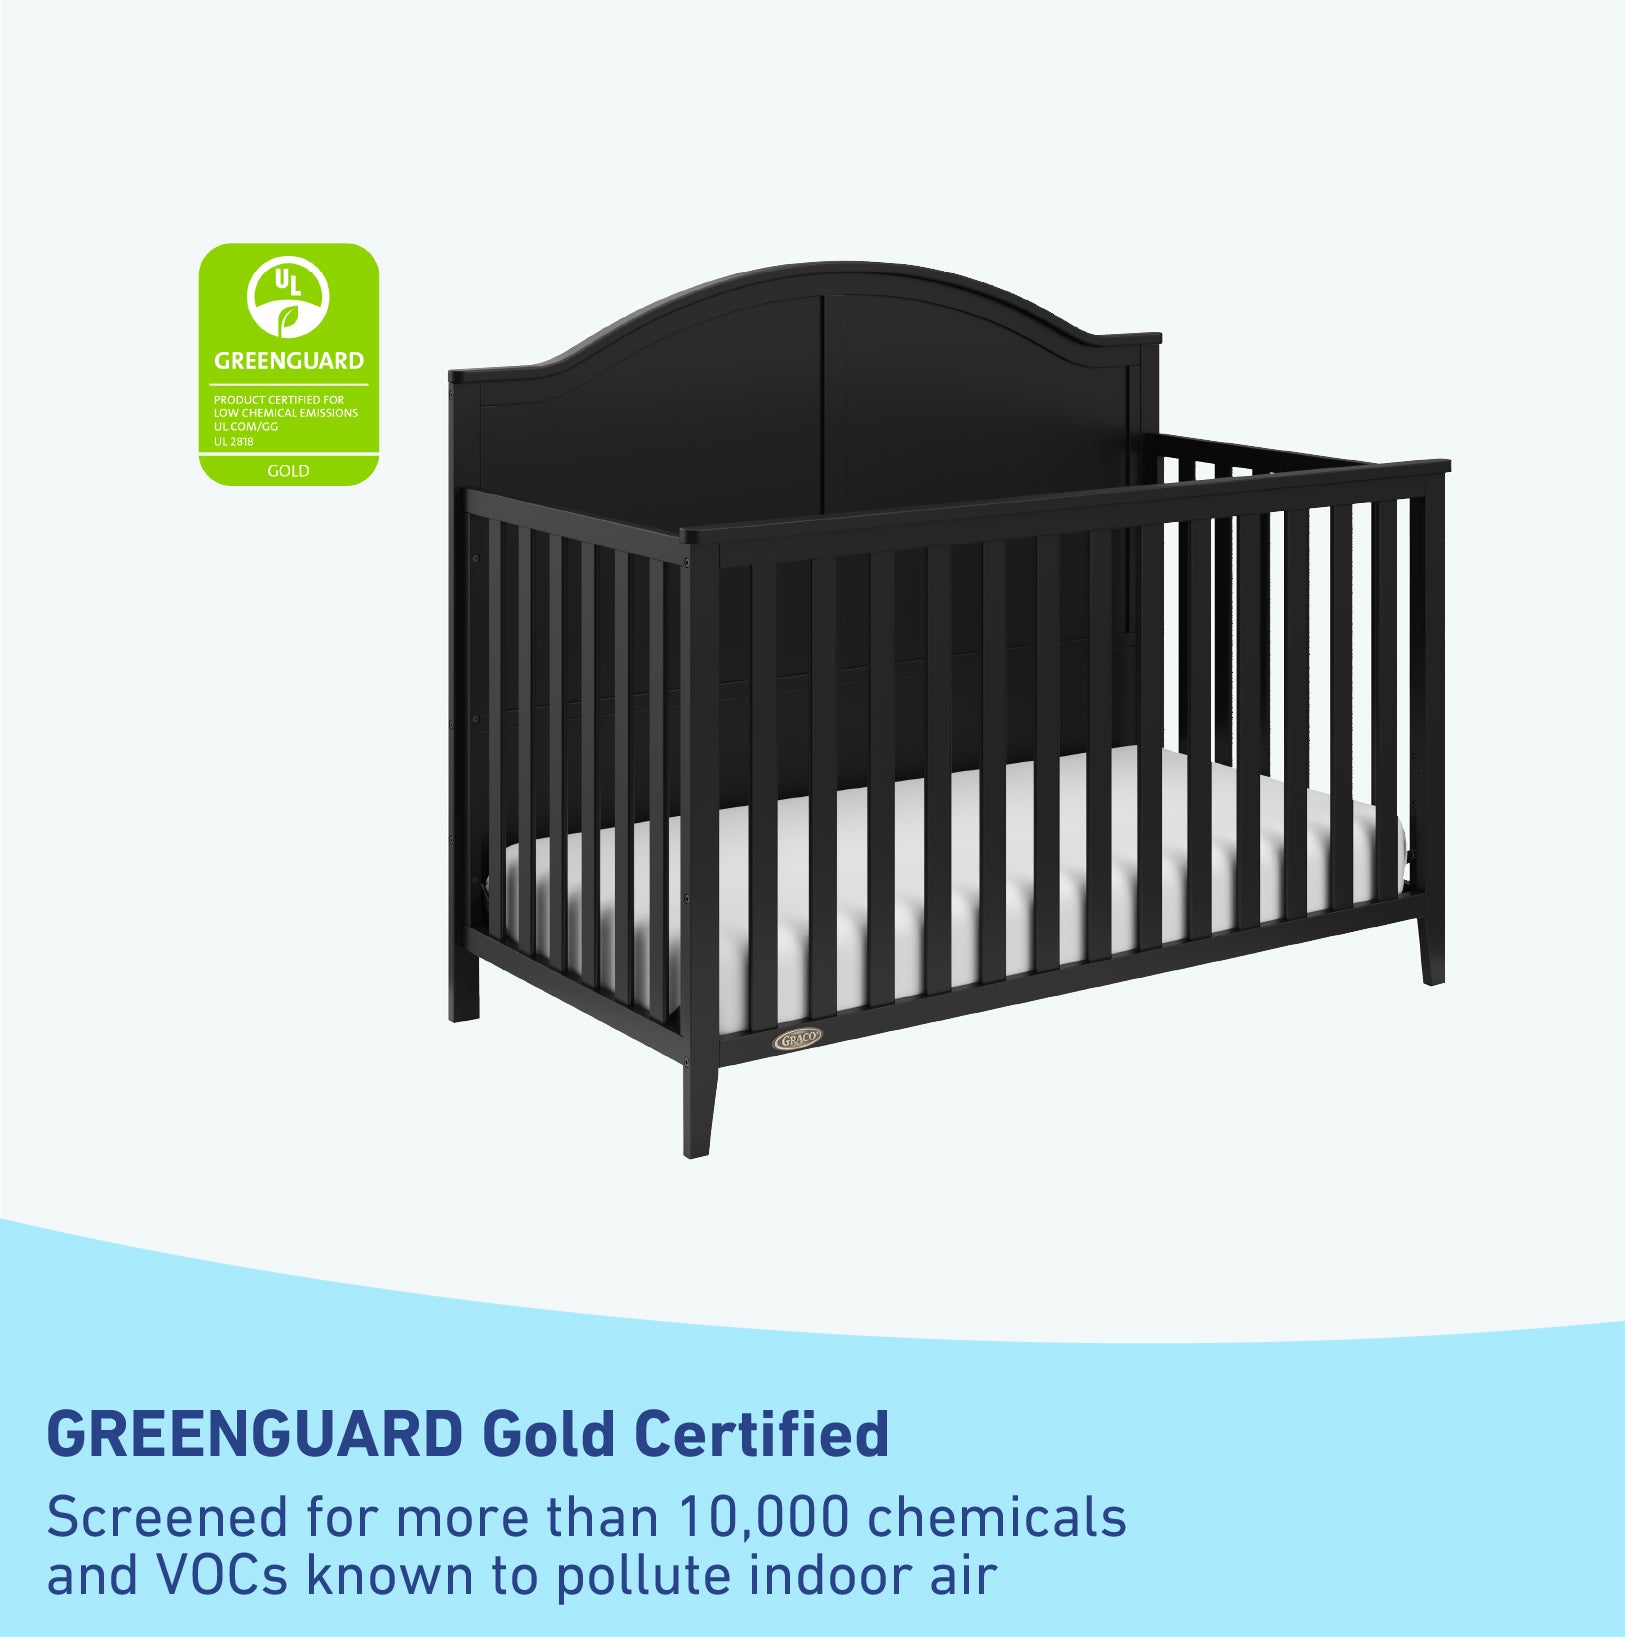 GREENGUARD Gold Certified black crib